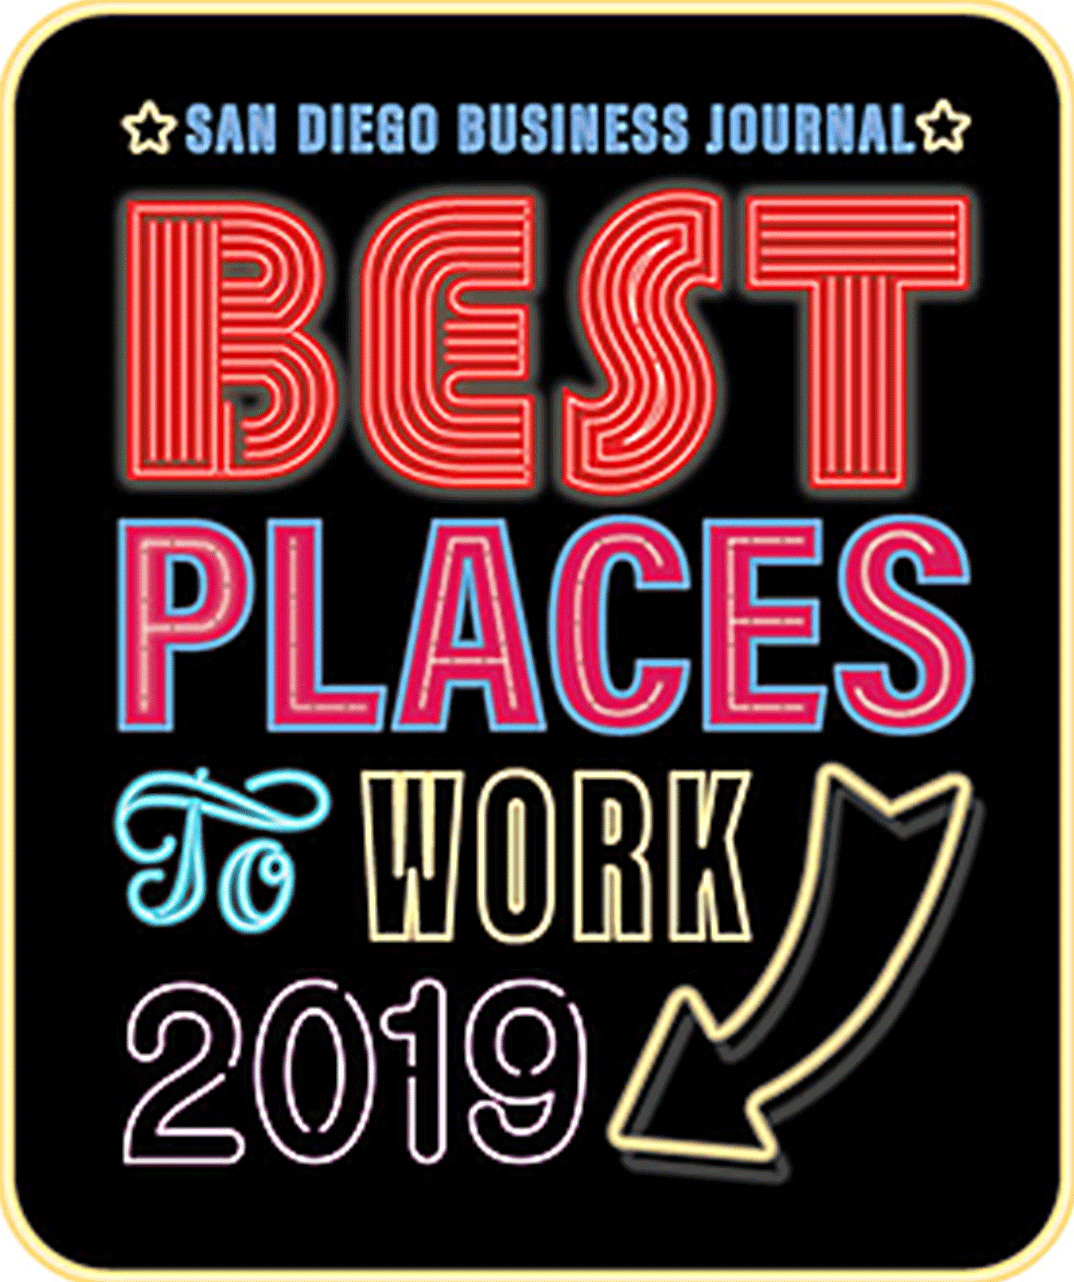 SDBJ Best Places to Work 2019 award emblem.